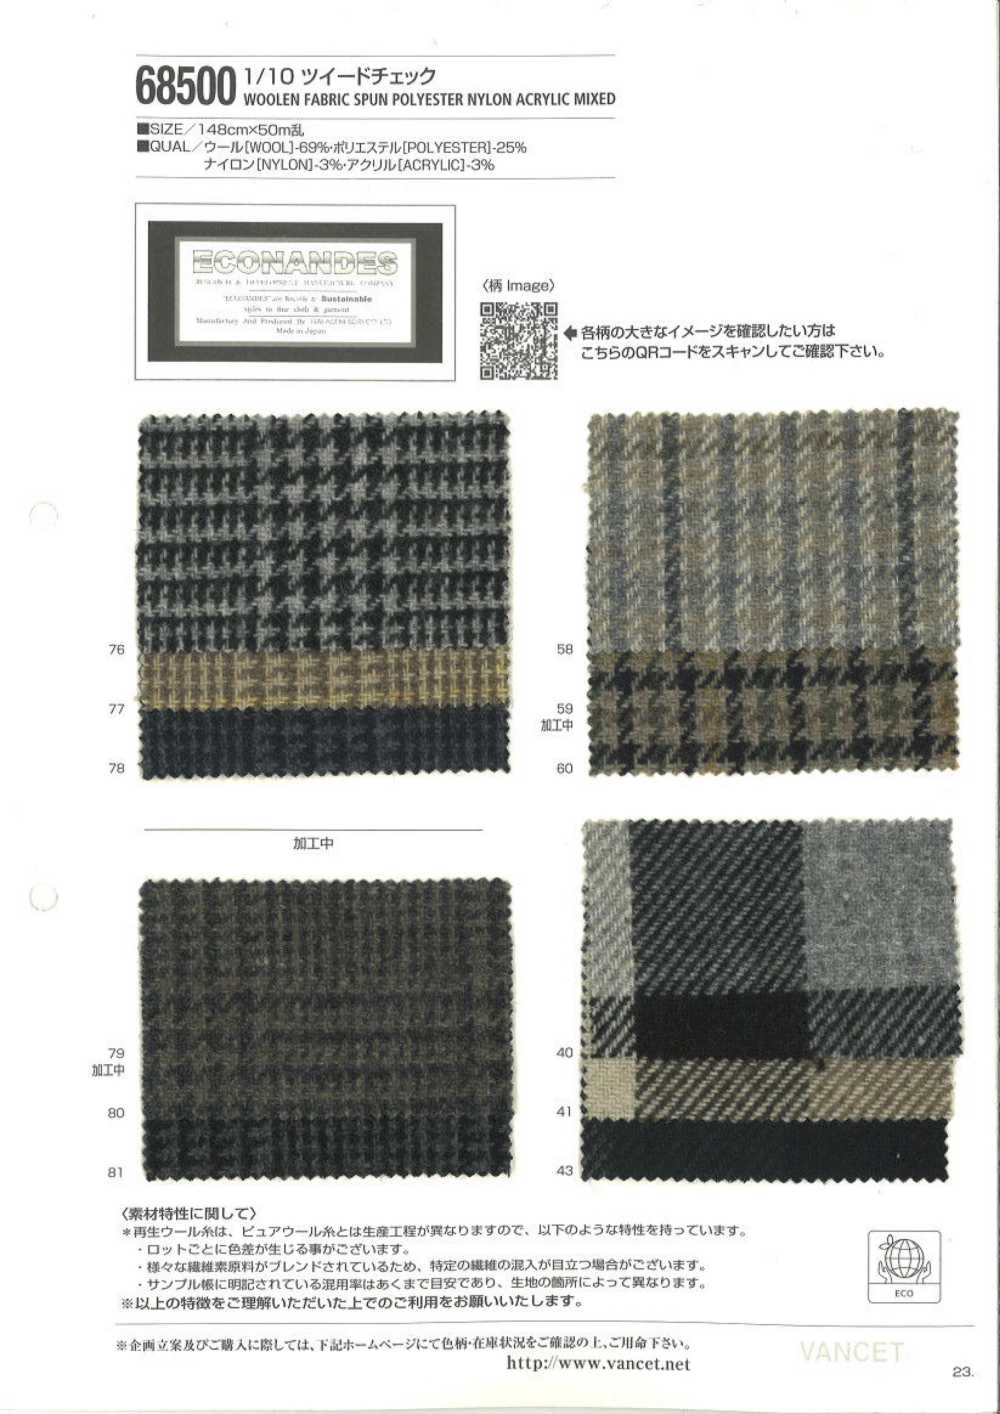 68500 1/10 Tweed-Karomuster [mit Recyceltem Wollgarn][Textilgewebe] VANCET